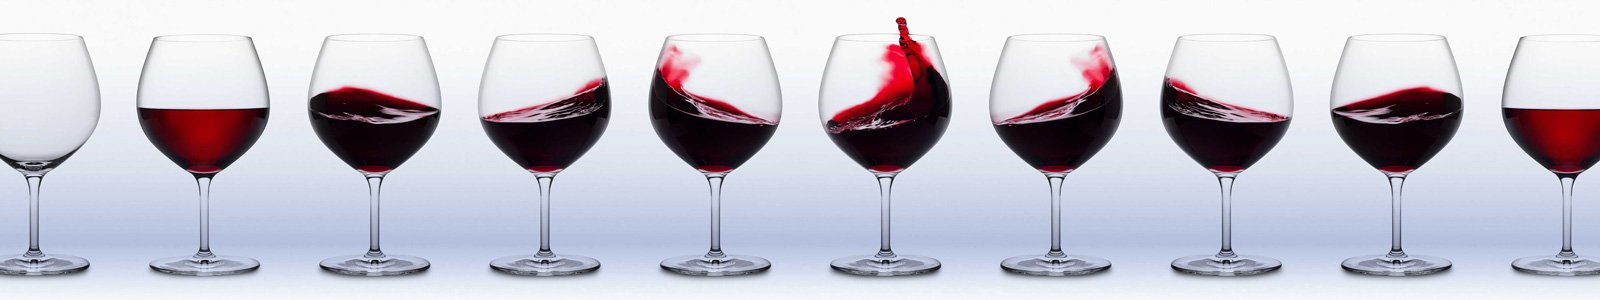 №7150 - Бокалы красного вина на светлом фоне